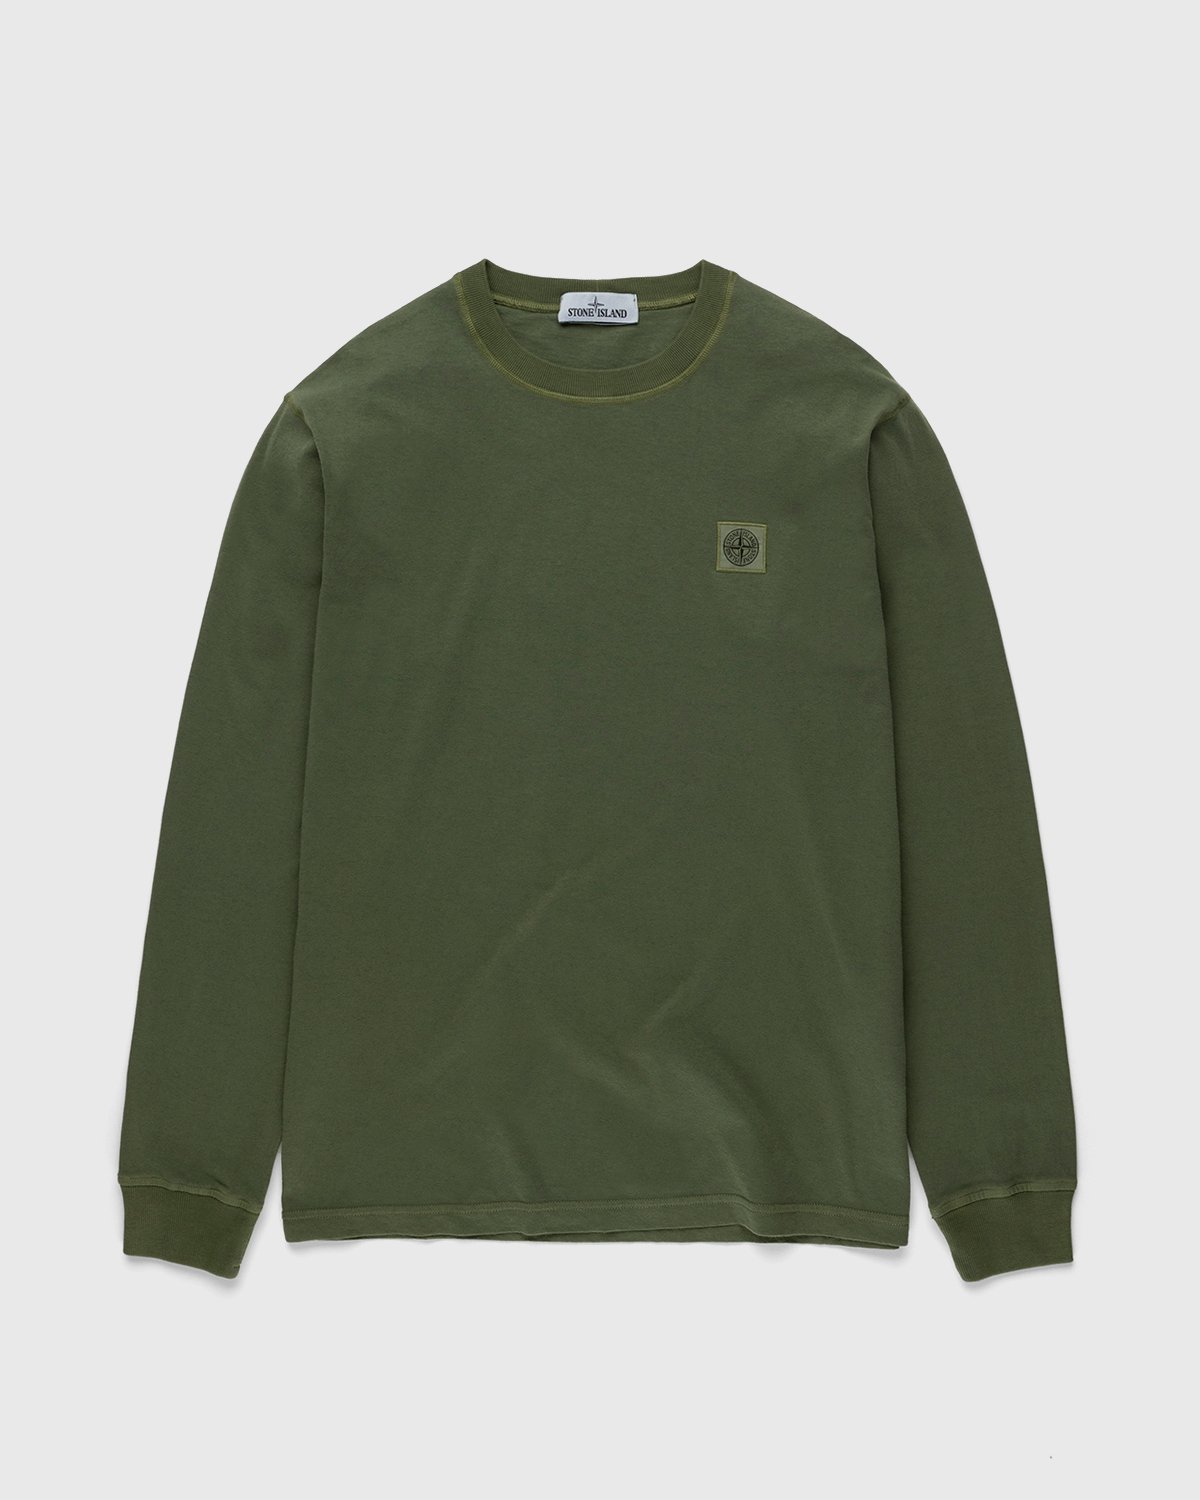 Stone Island - 21857 Garment-Dyed Fissato T-Shirt Olive Green - Clothing - Green - Image 1